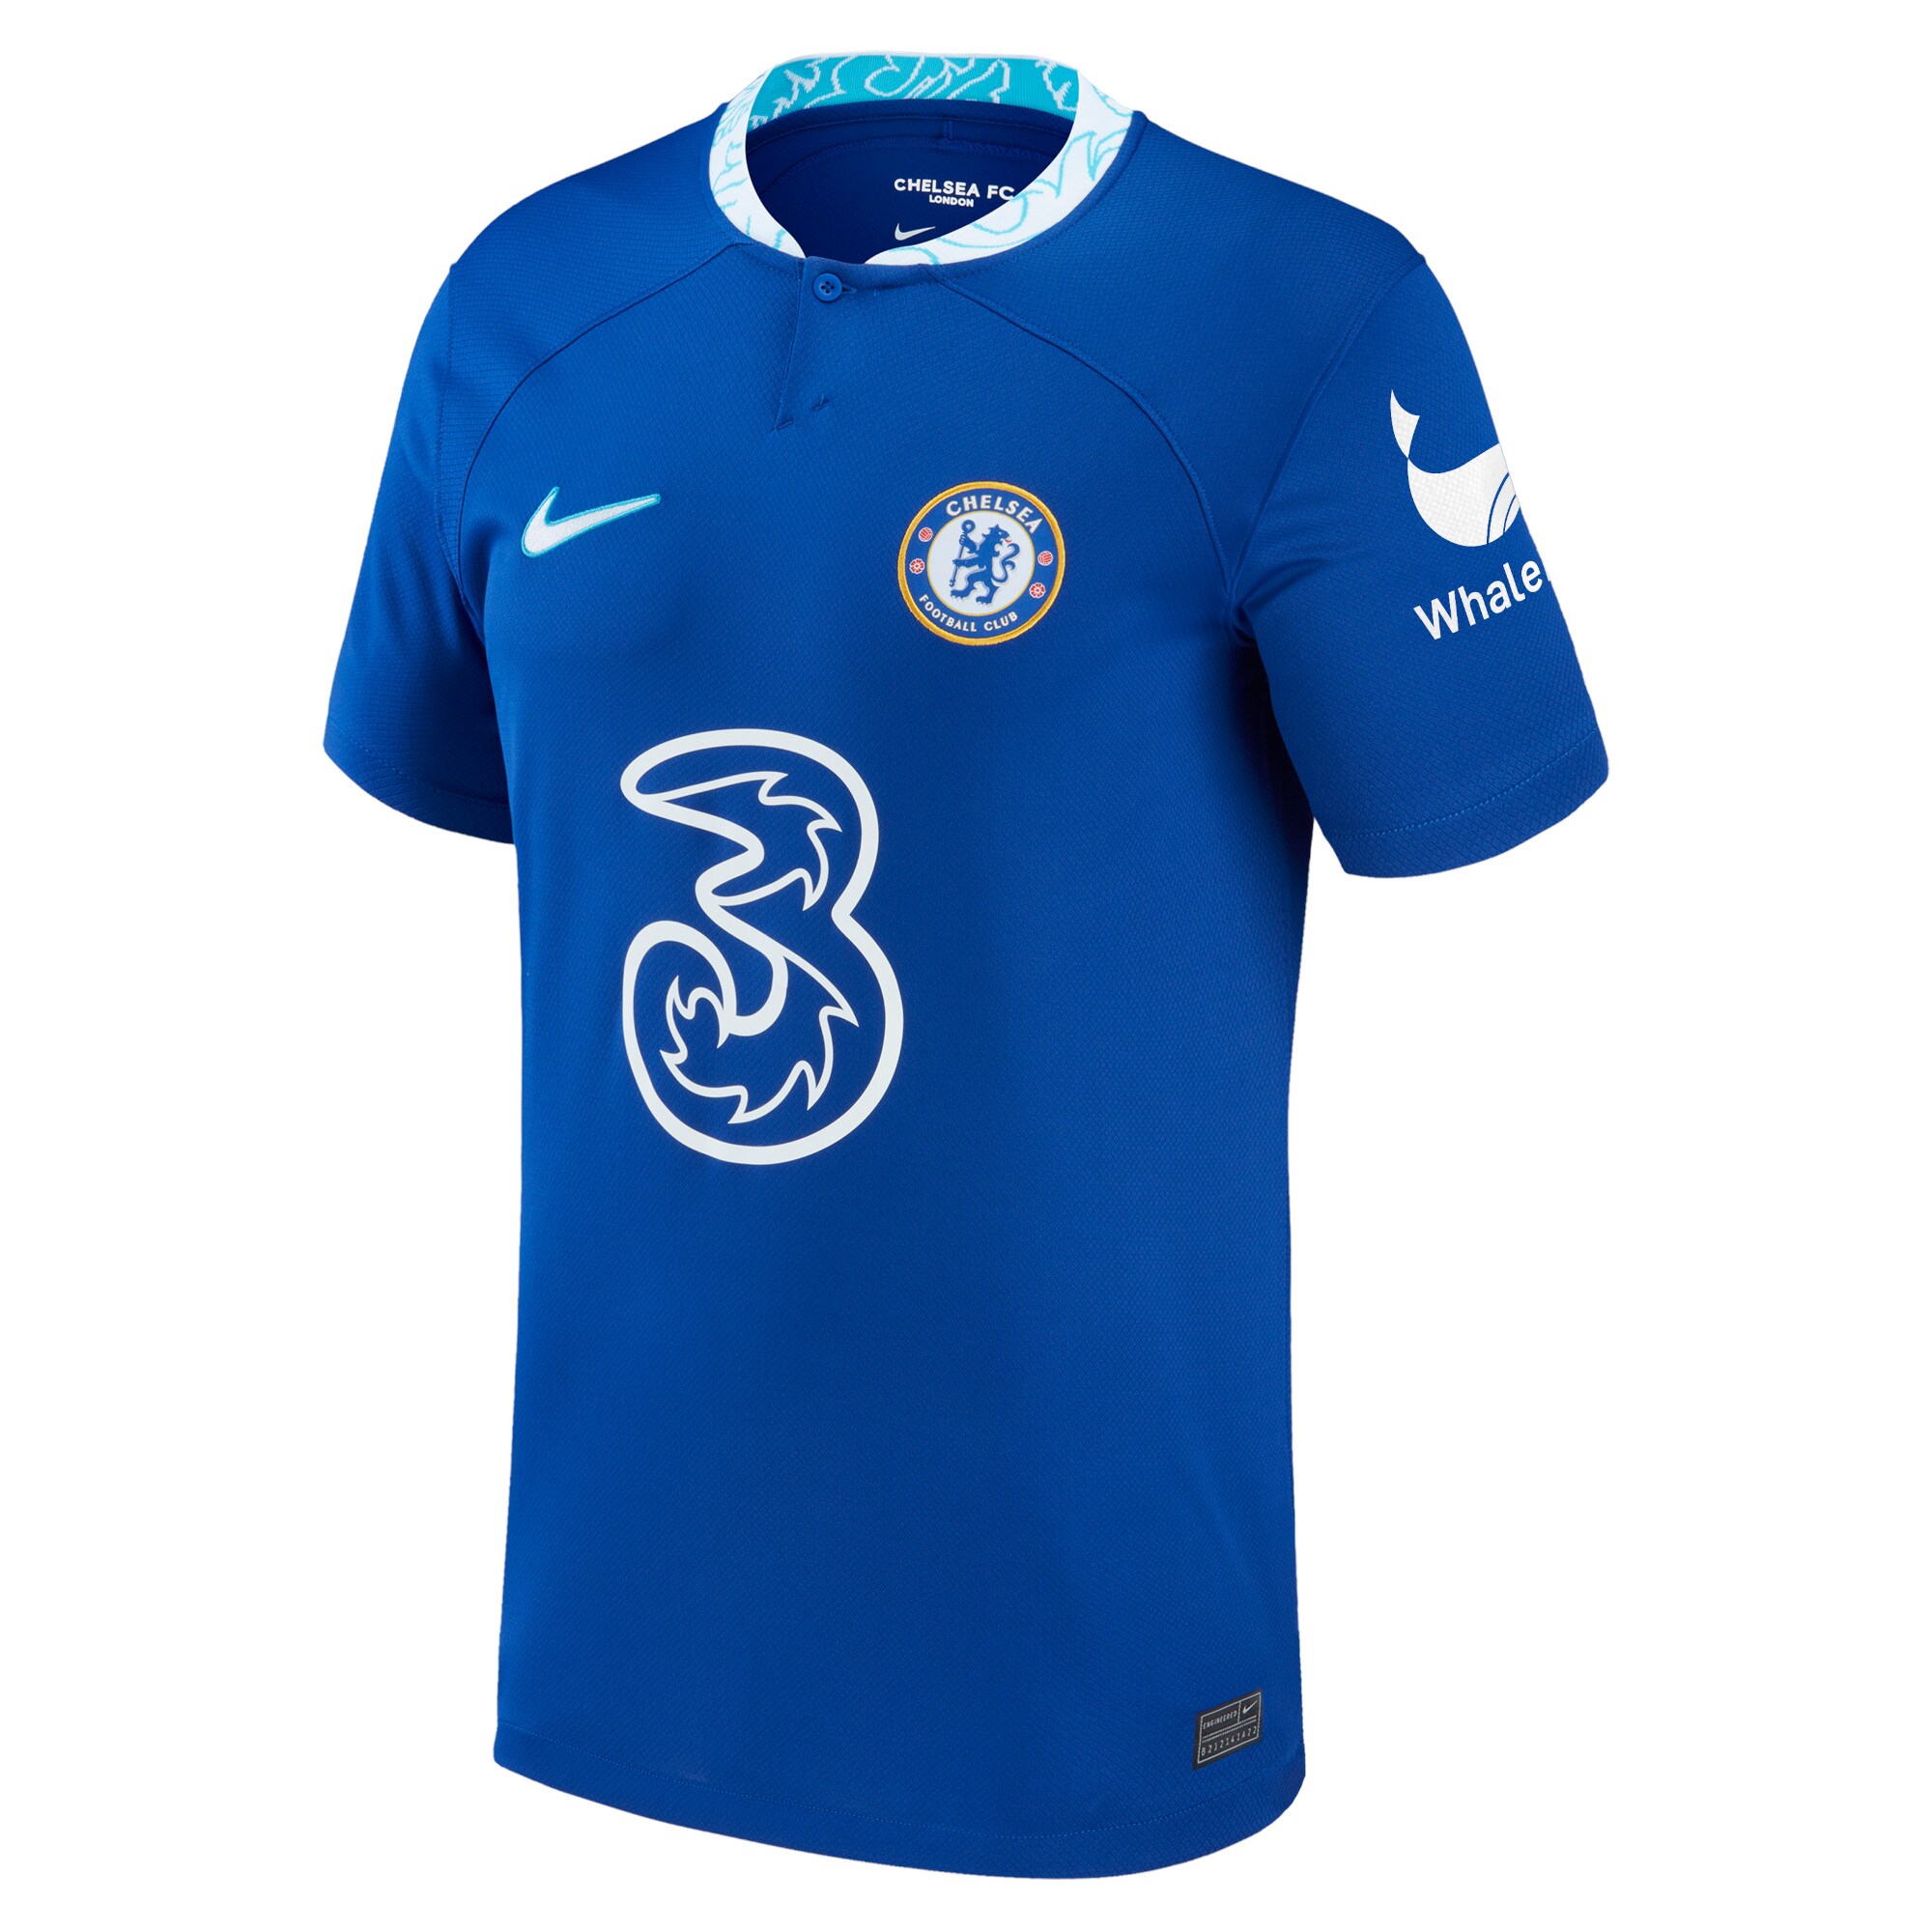 Chelsea Cup Home Stadium Shirt 2022-23 with Leupolz 8 printing